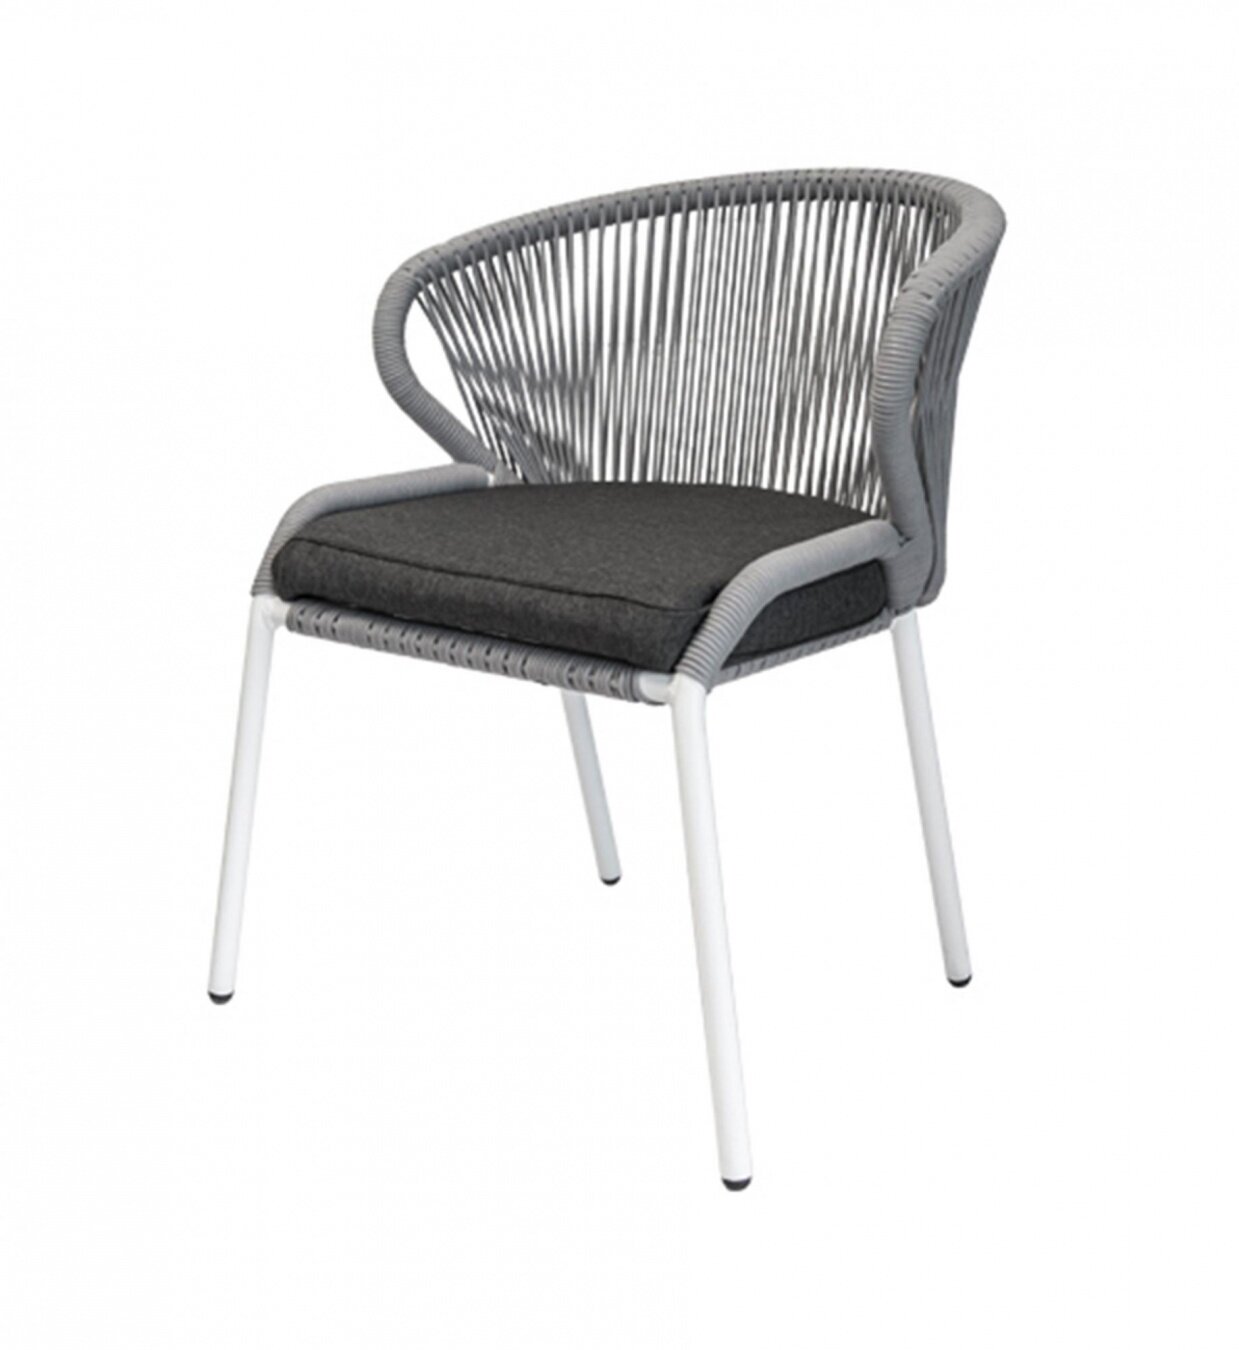 Плетеный стул "Милан" из роупа (веревки), 4SiS, каркас белый, цвет серый